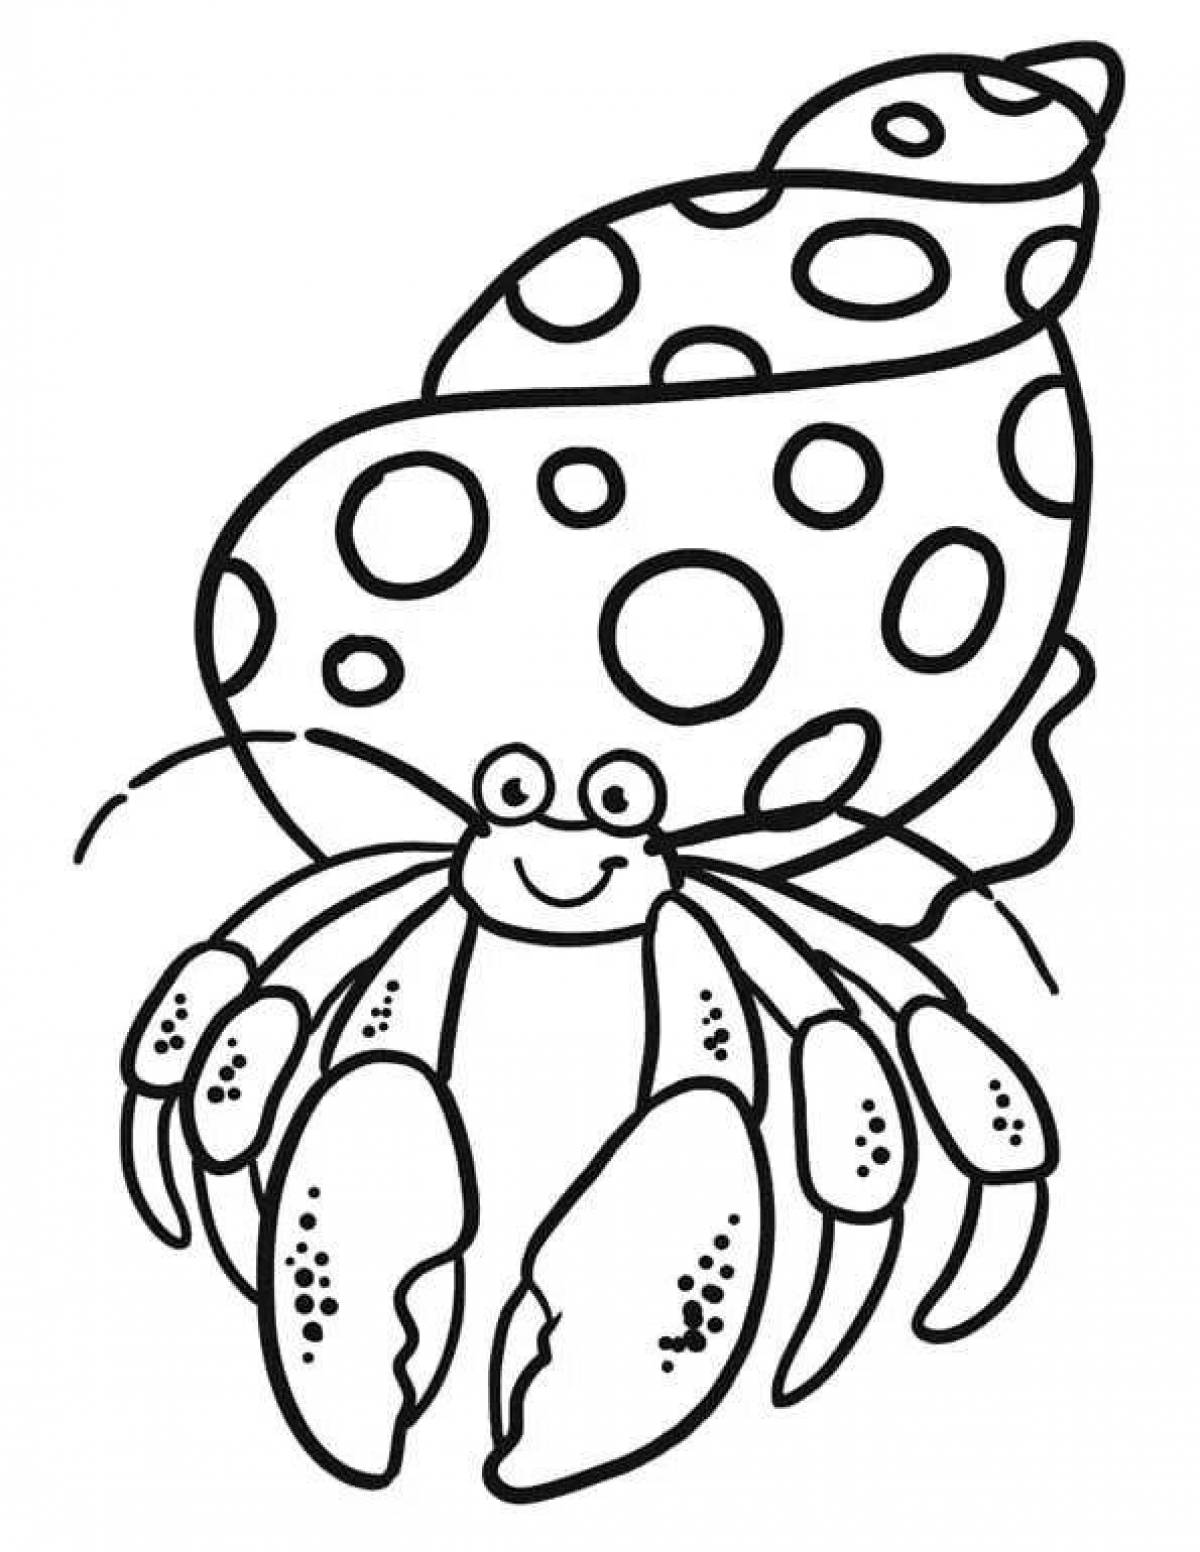 Adorable hermit crab coloring page